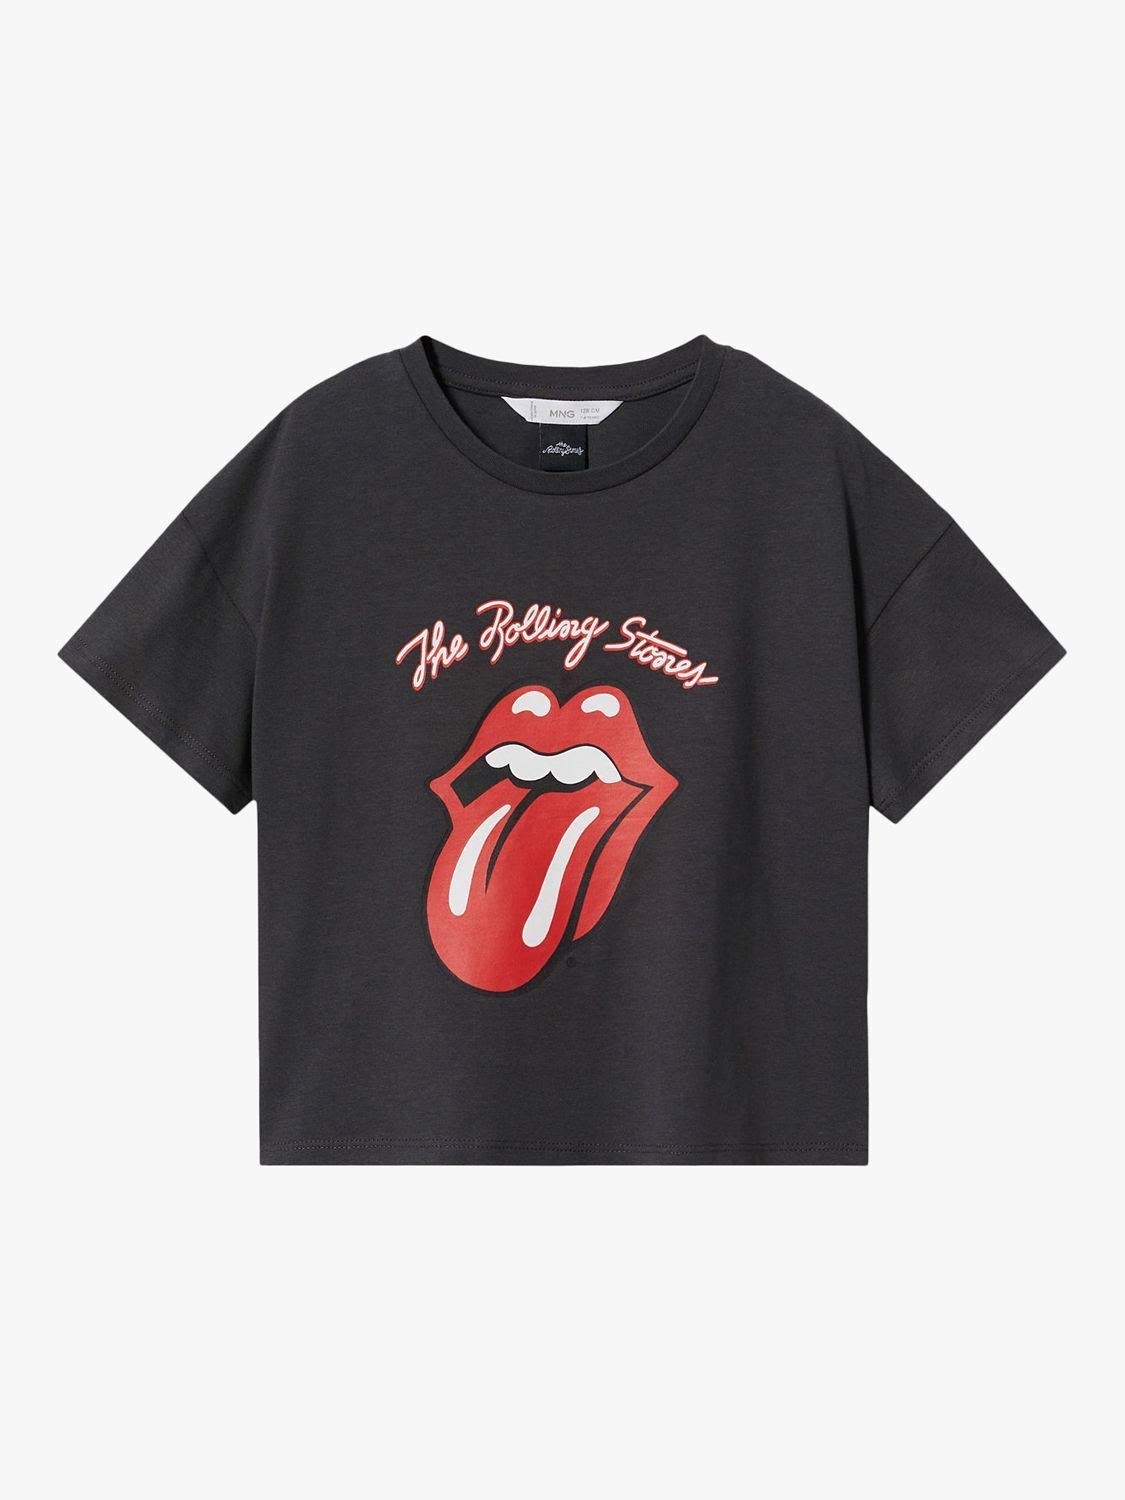 Mango Kids The Rolling Stones T-Shirt.jpeg